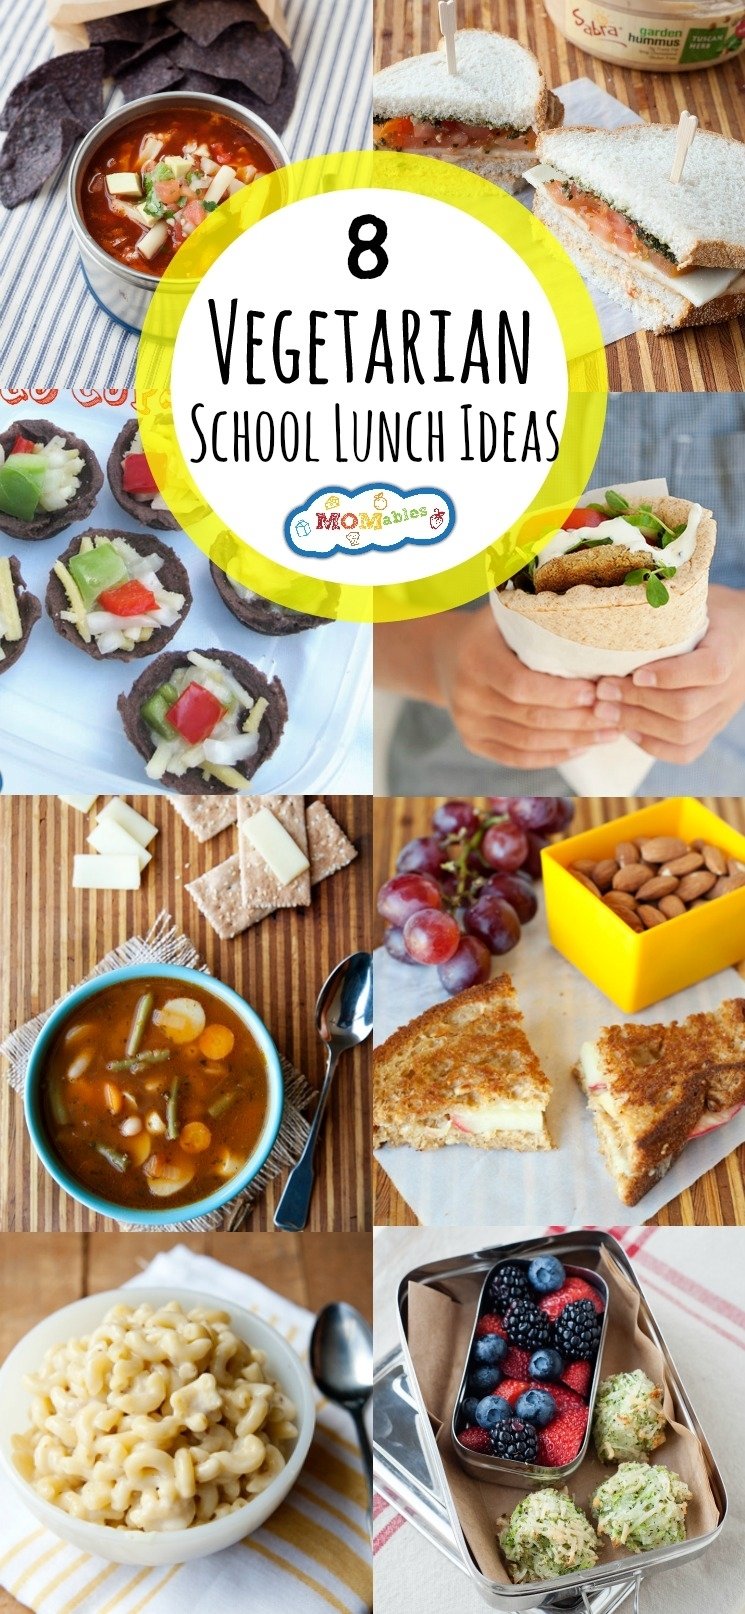 10 Fabulous Vegan Lunch Ideas For Kids 8 vegetarian school lunch ideas momables 1 2022